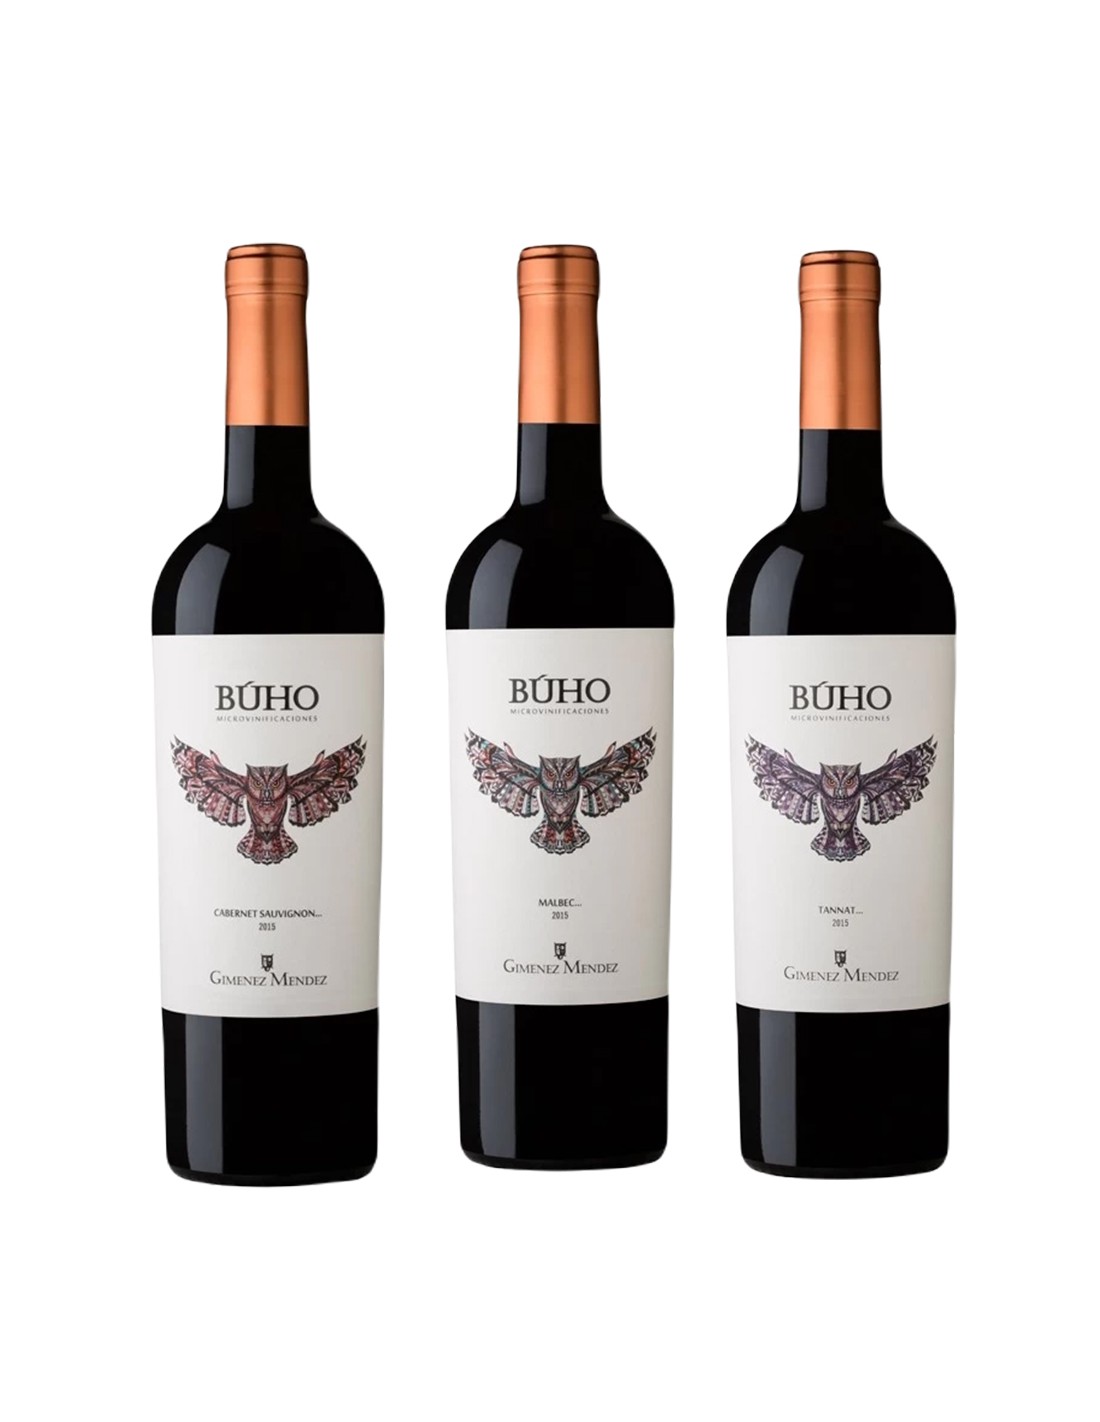 Pachet Buho Microvinificaciones Uruguayan Wine Delight alcooldiscount.ro